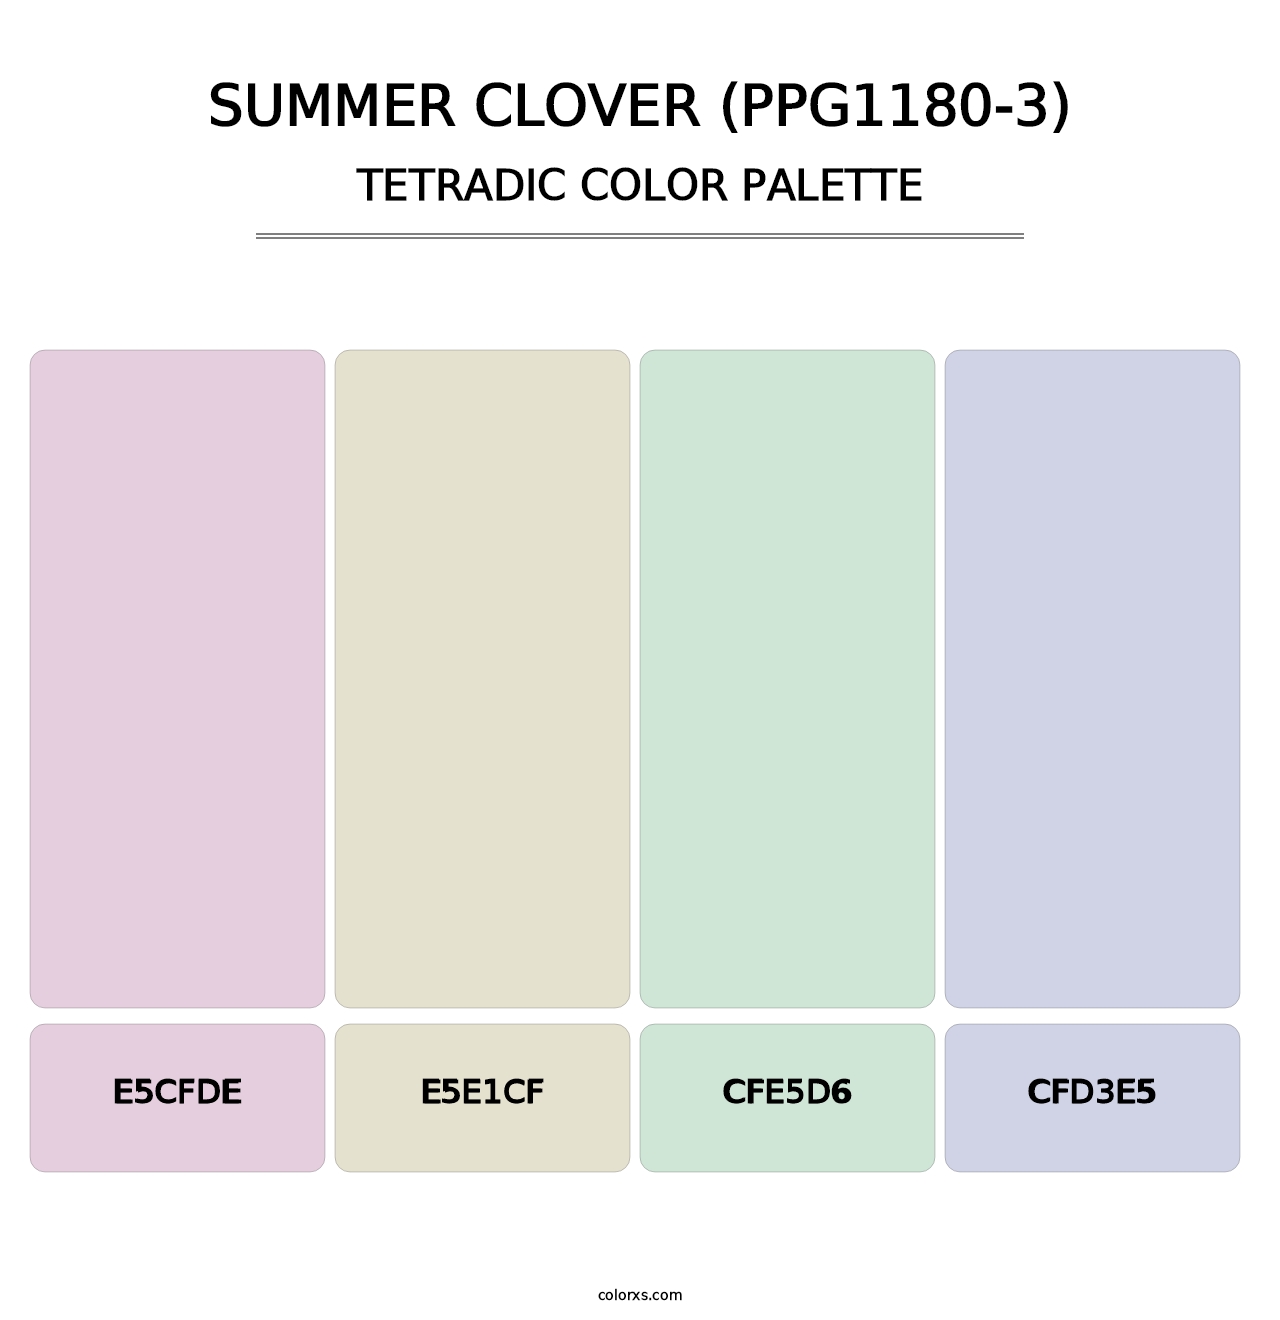 Summer Clover (PPG1180-3) - Tetradic Color Palette